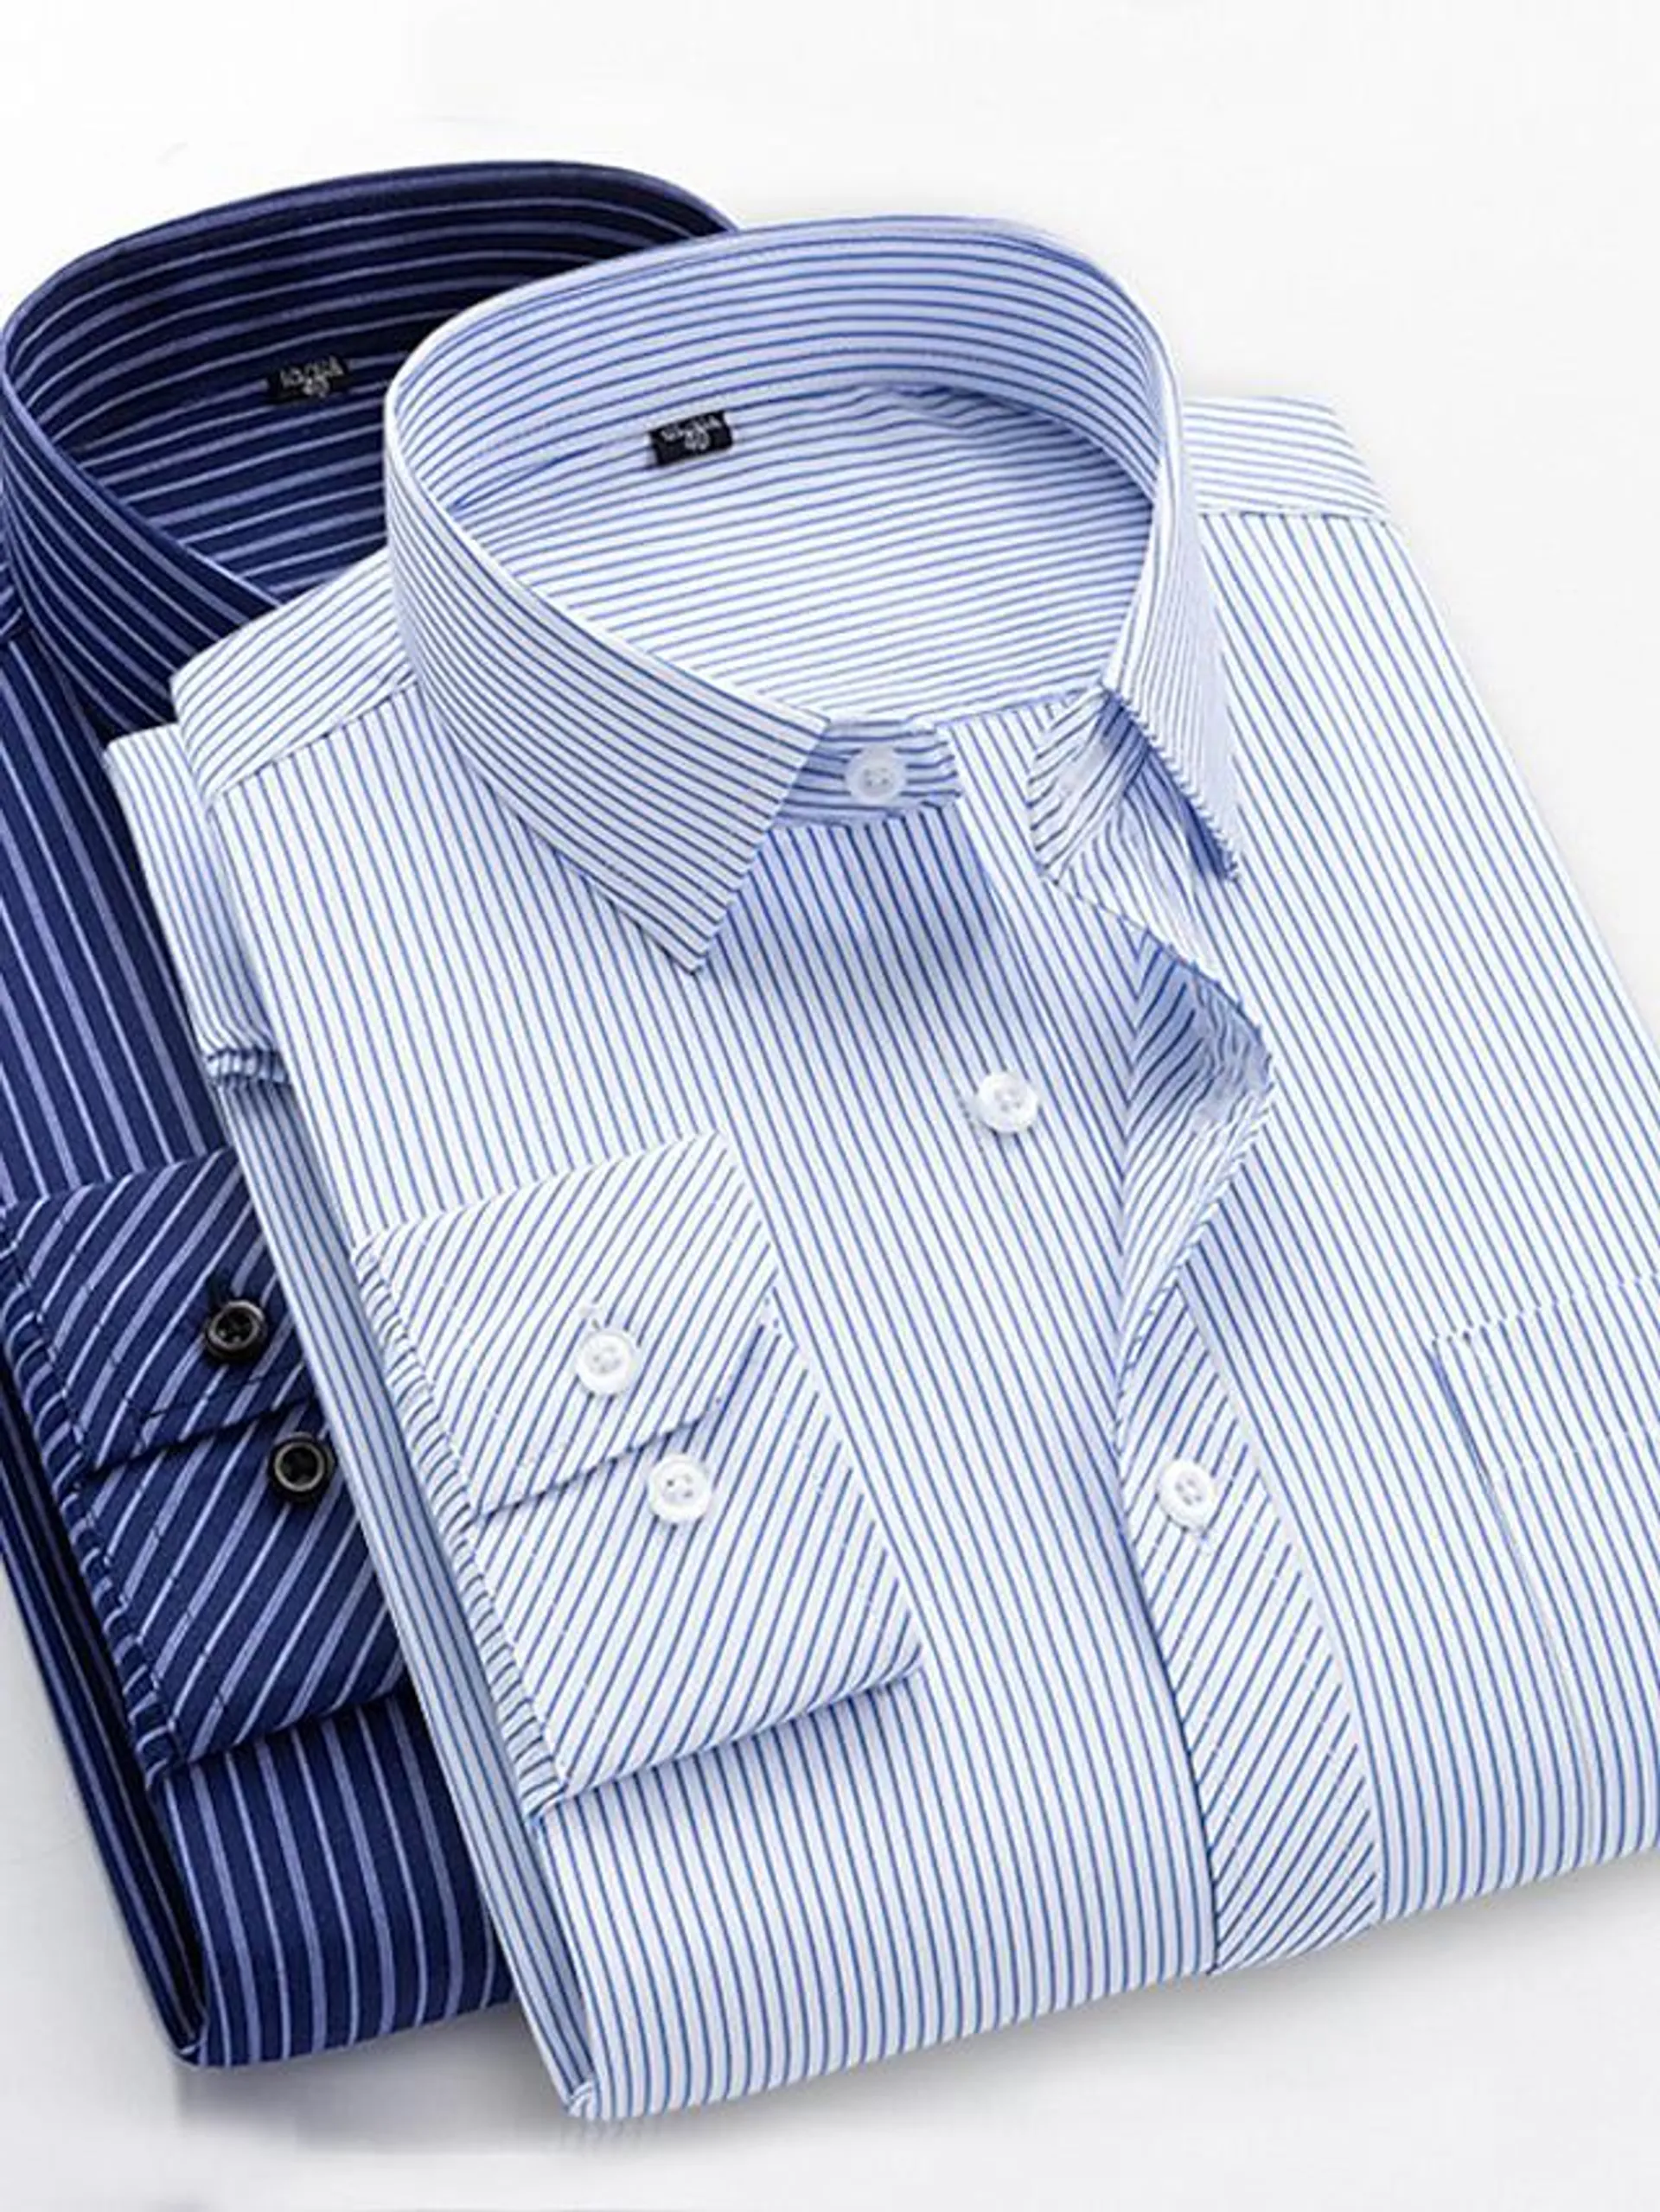 Men's Button Up Shirt Dress Shirt Collared Shirt Non Iron Shirt A B C Long Sleeve Striped Collar Spring & Fall Wedding Work Clothing Apparel Button-Down